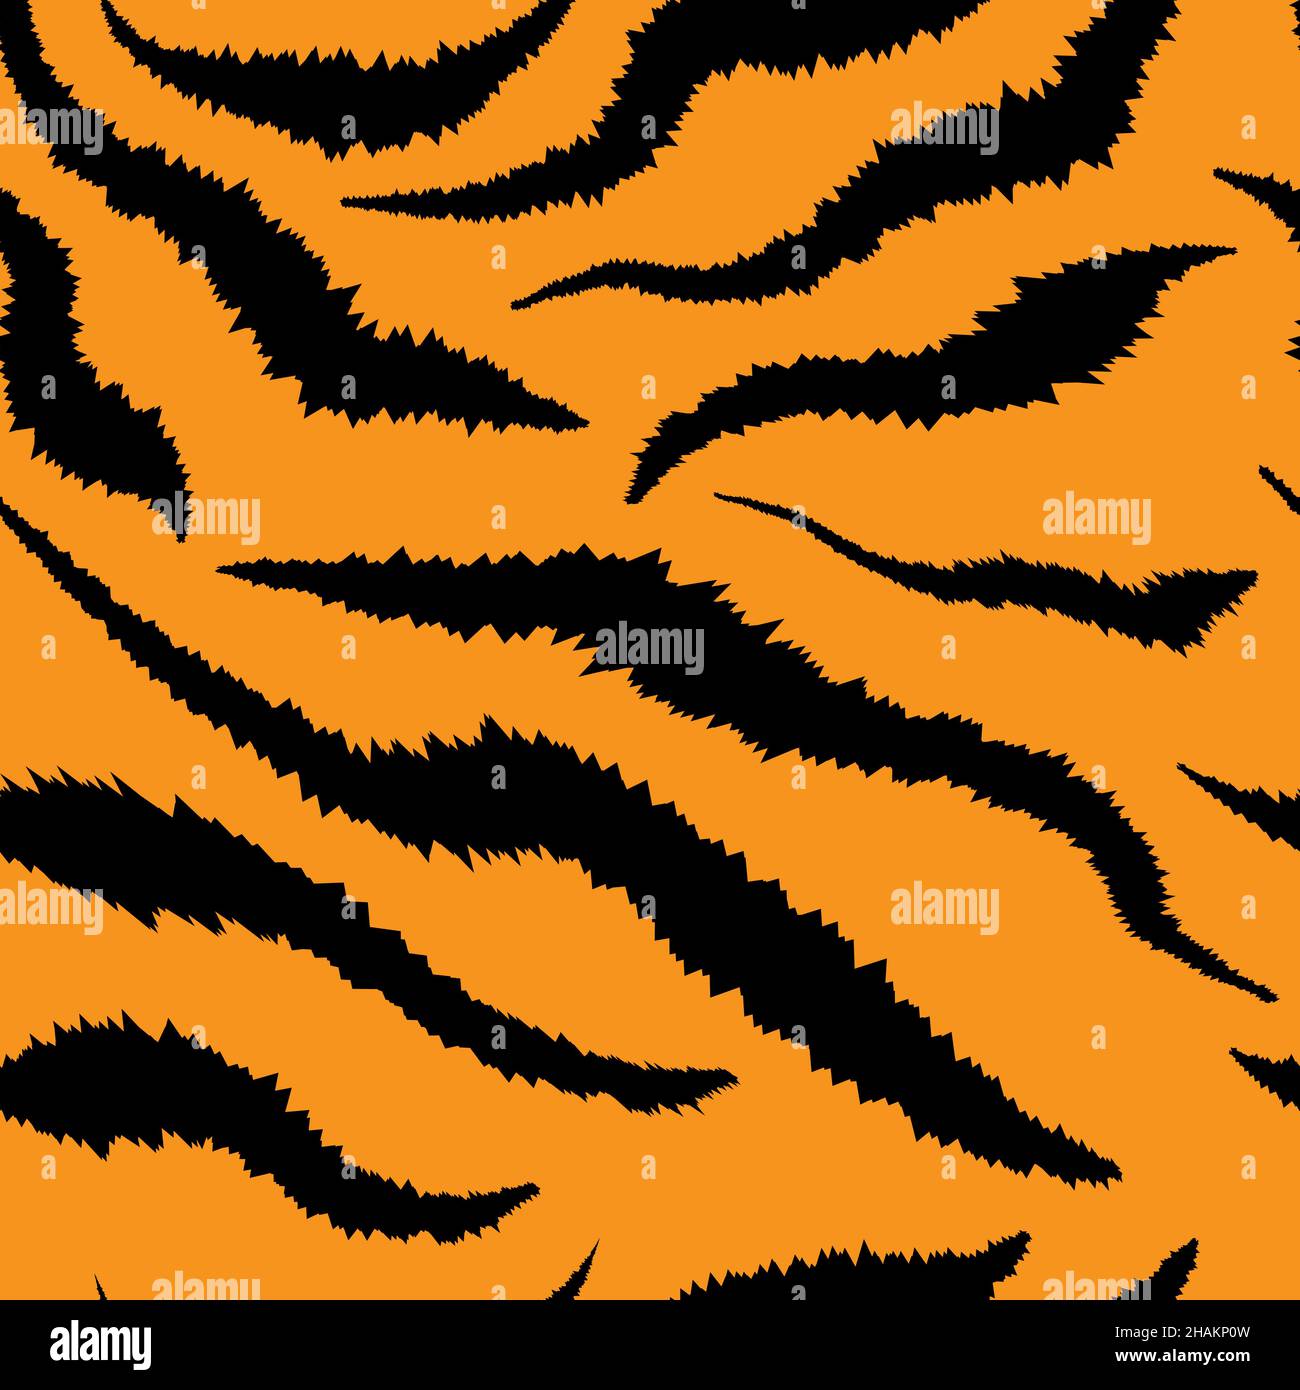 https://c8.alamy.com/comp/2HAKP0W/seamless-pattern-with-tiger-print-vector-illustration-2HAKP0W.jpg